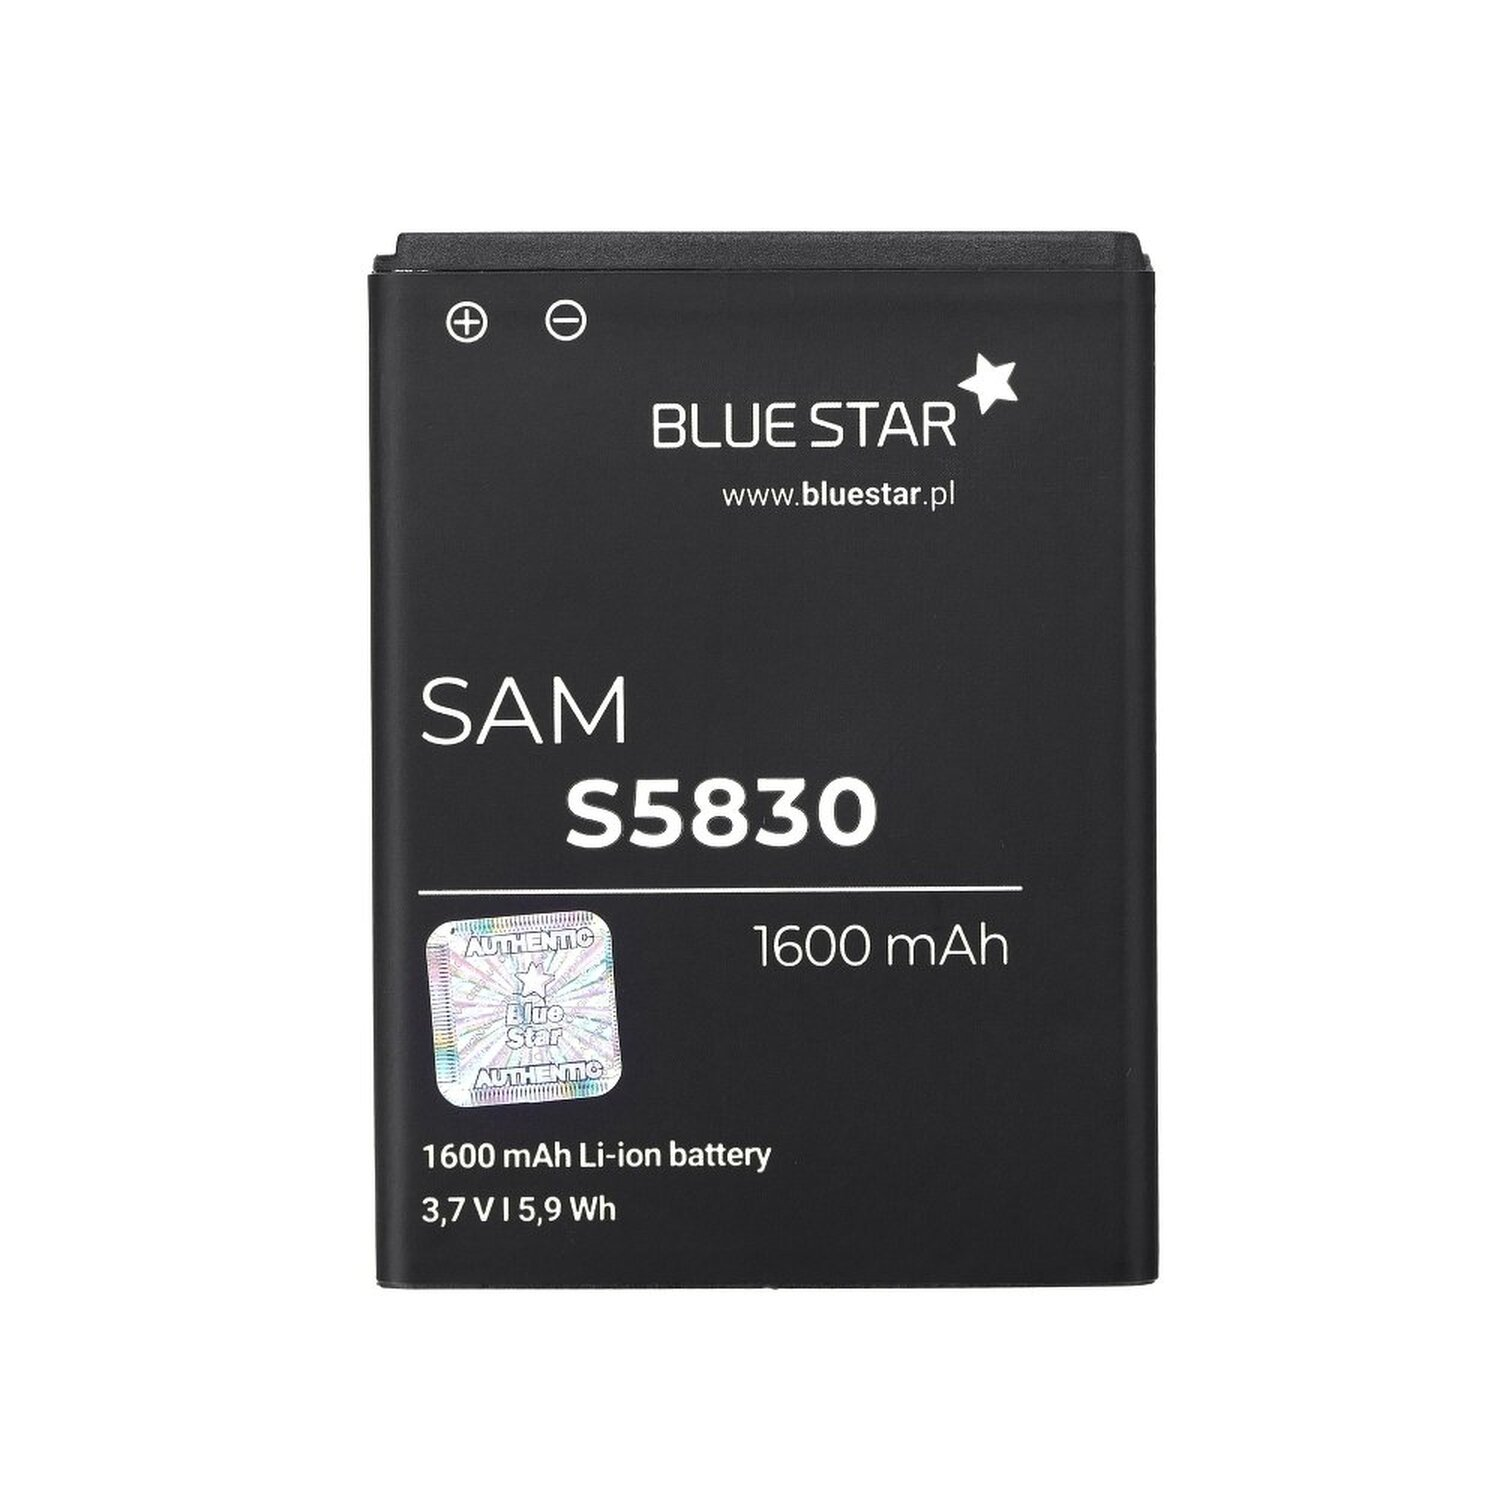 BLUESTAR Akku für Samsung Galaxy Gio Handyakku Li-Ion Galaxy Ace/ (S5670)